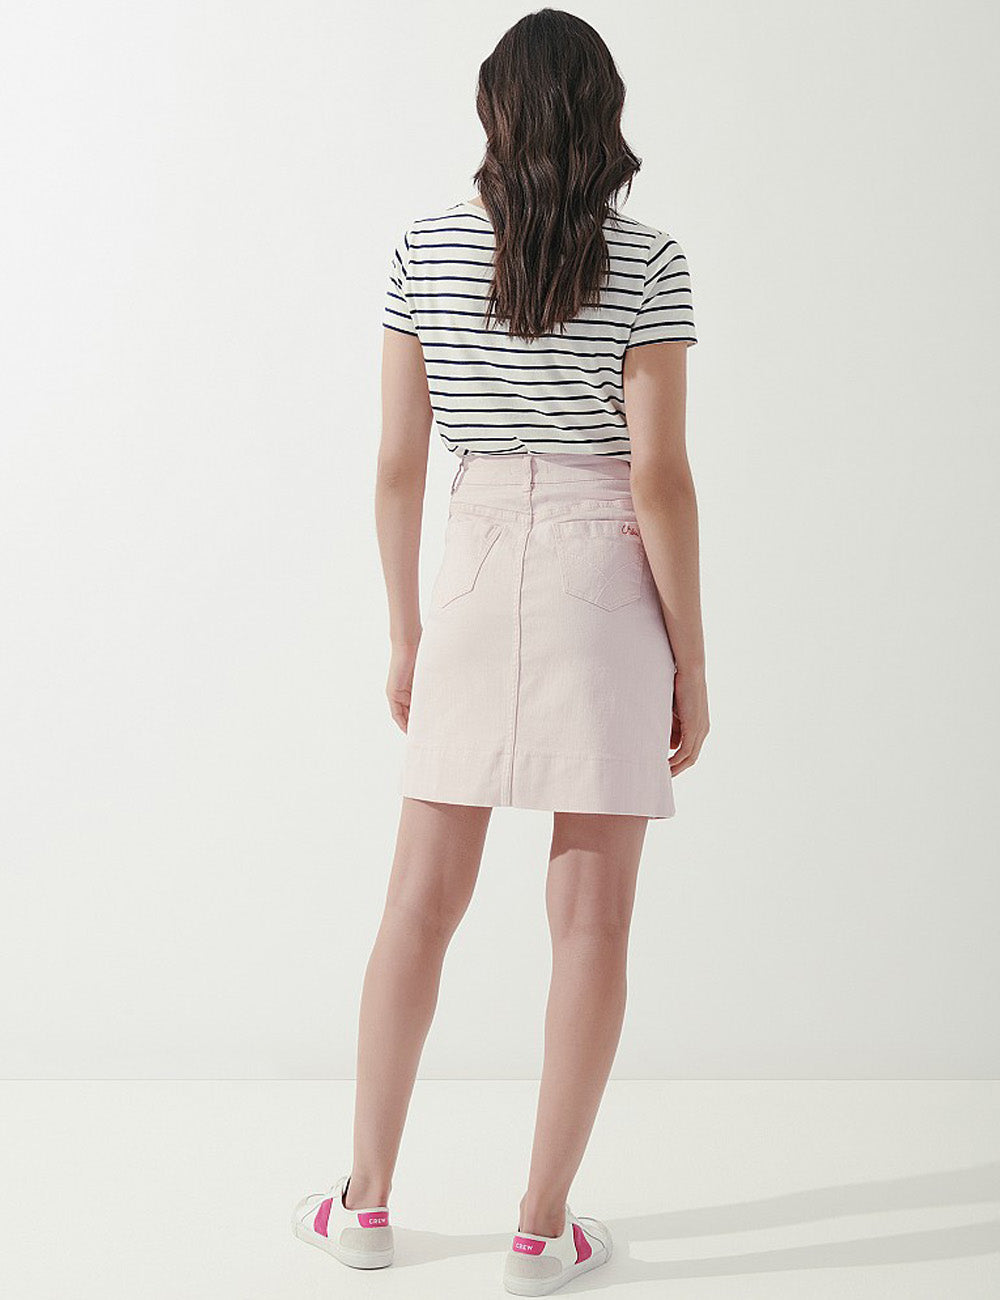 Crew Clothing Remy Denim Skirt - Soft Pink